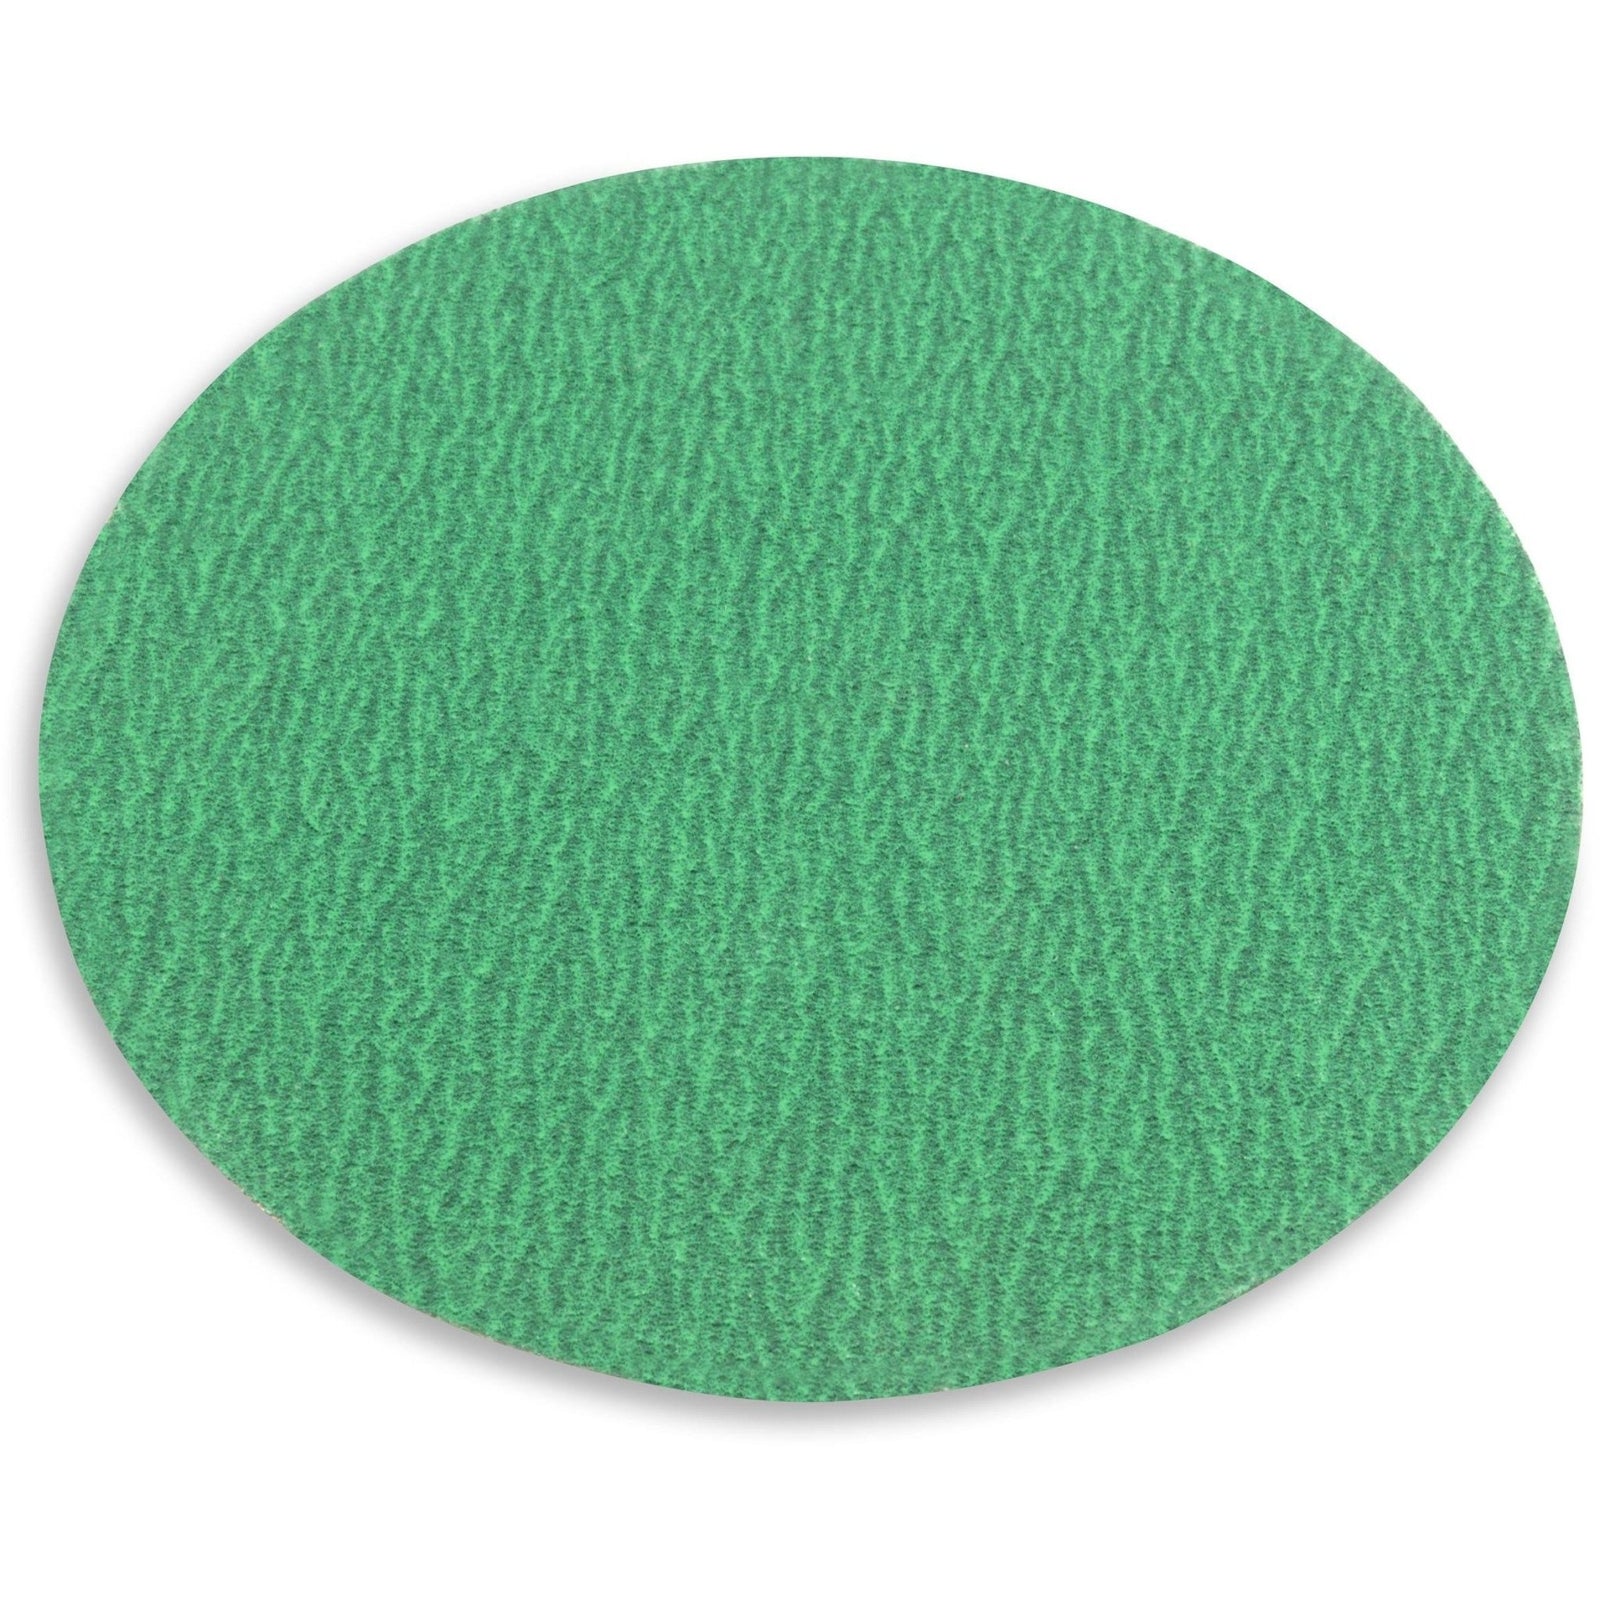 24 Inch Sanding Discs | Premium Quality, Long-Lasting | Red Label